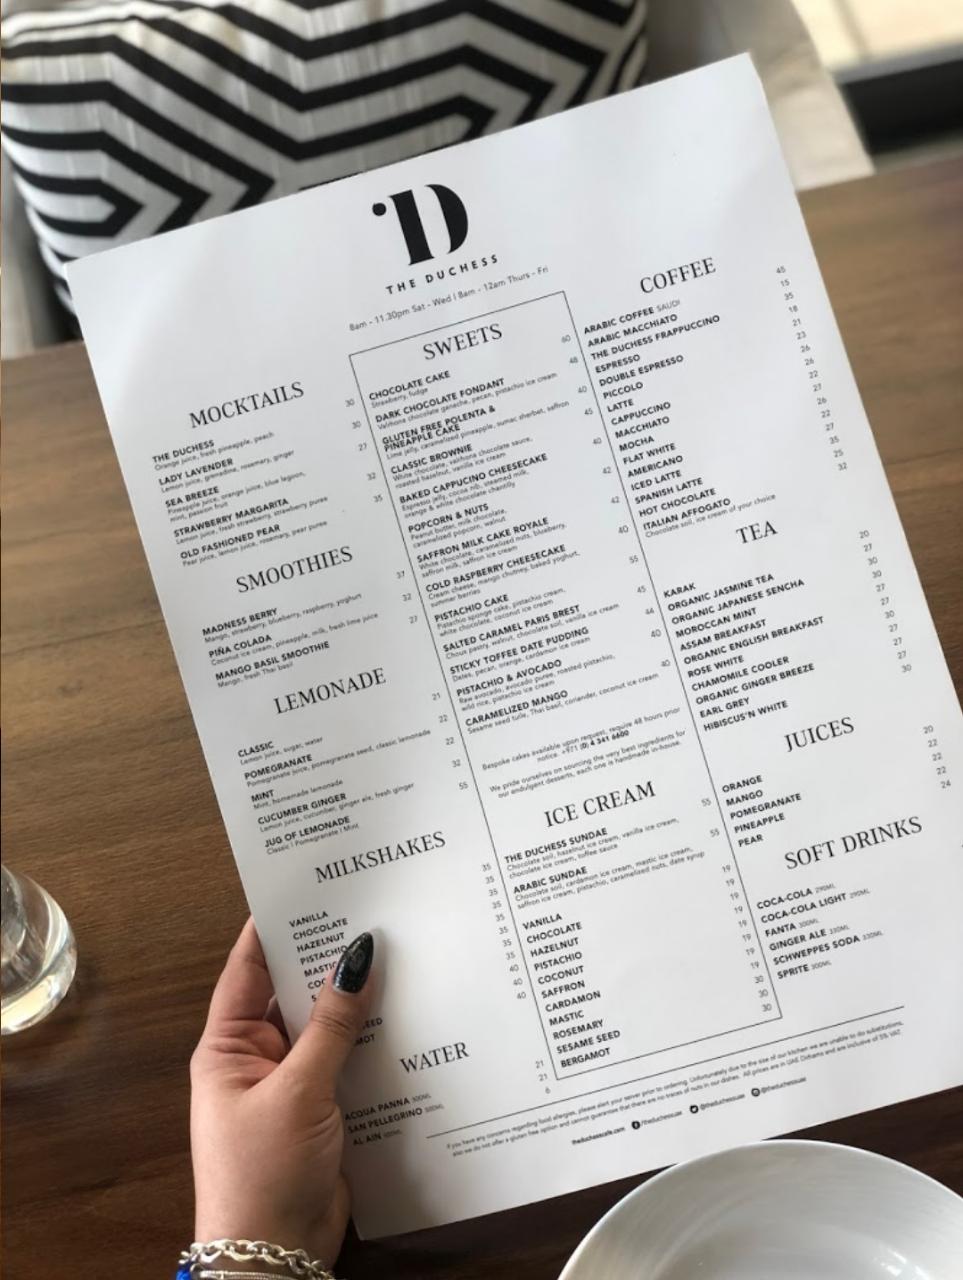 The Duchess resturant menu